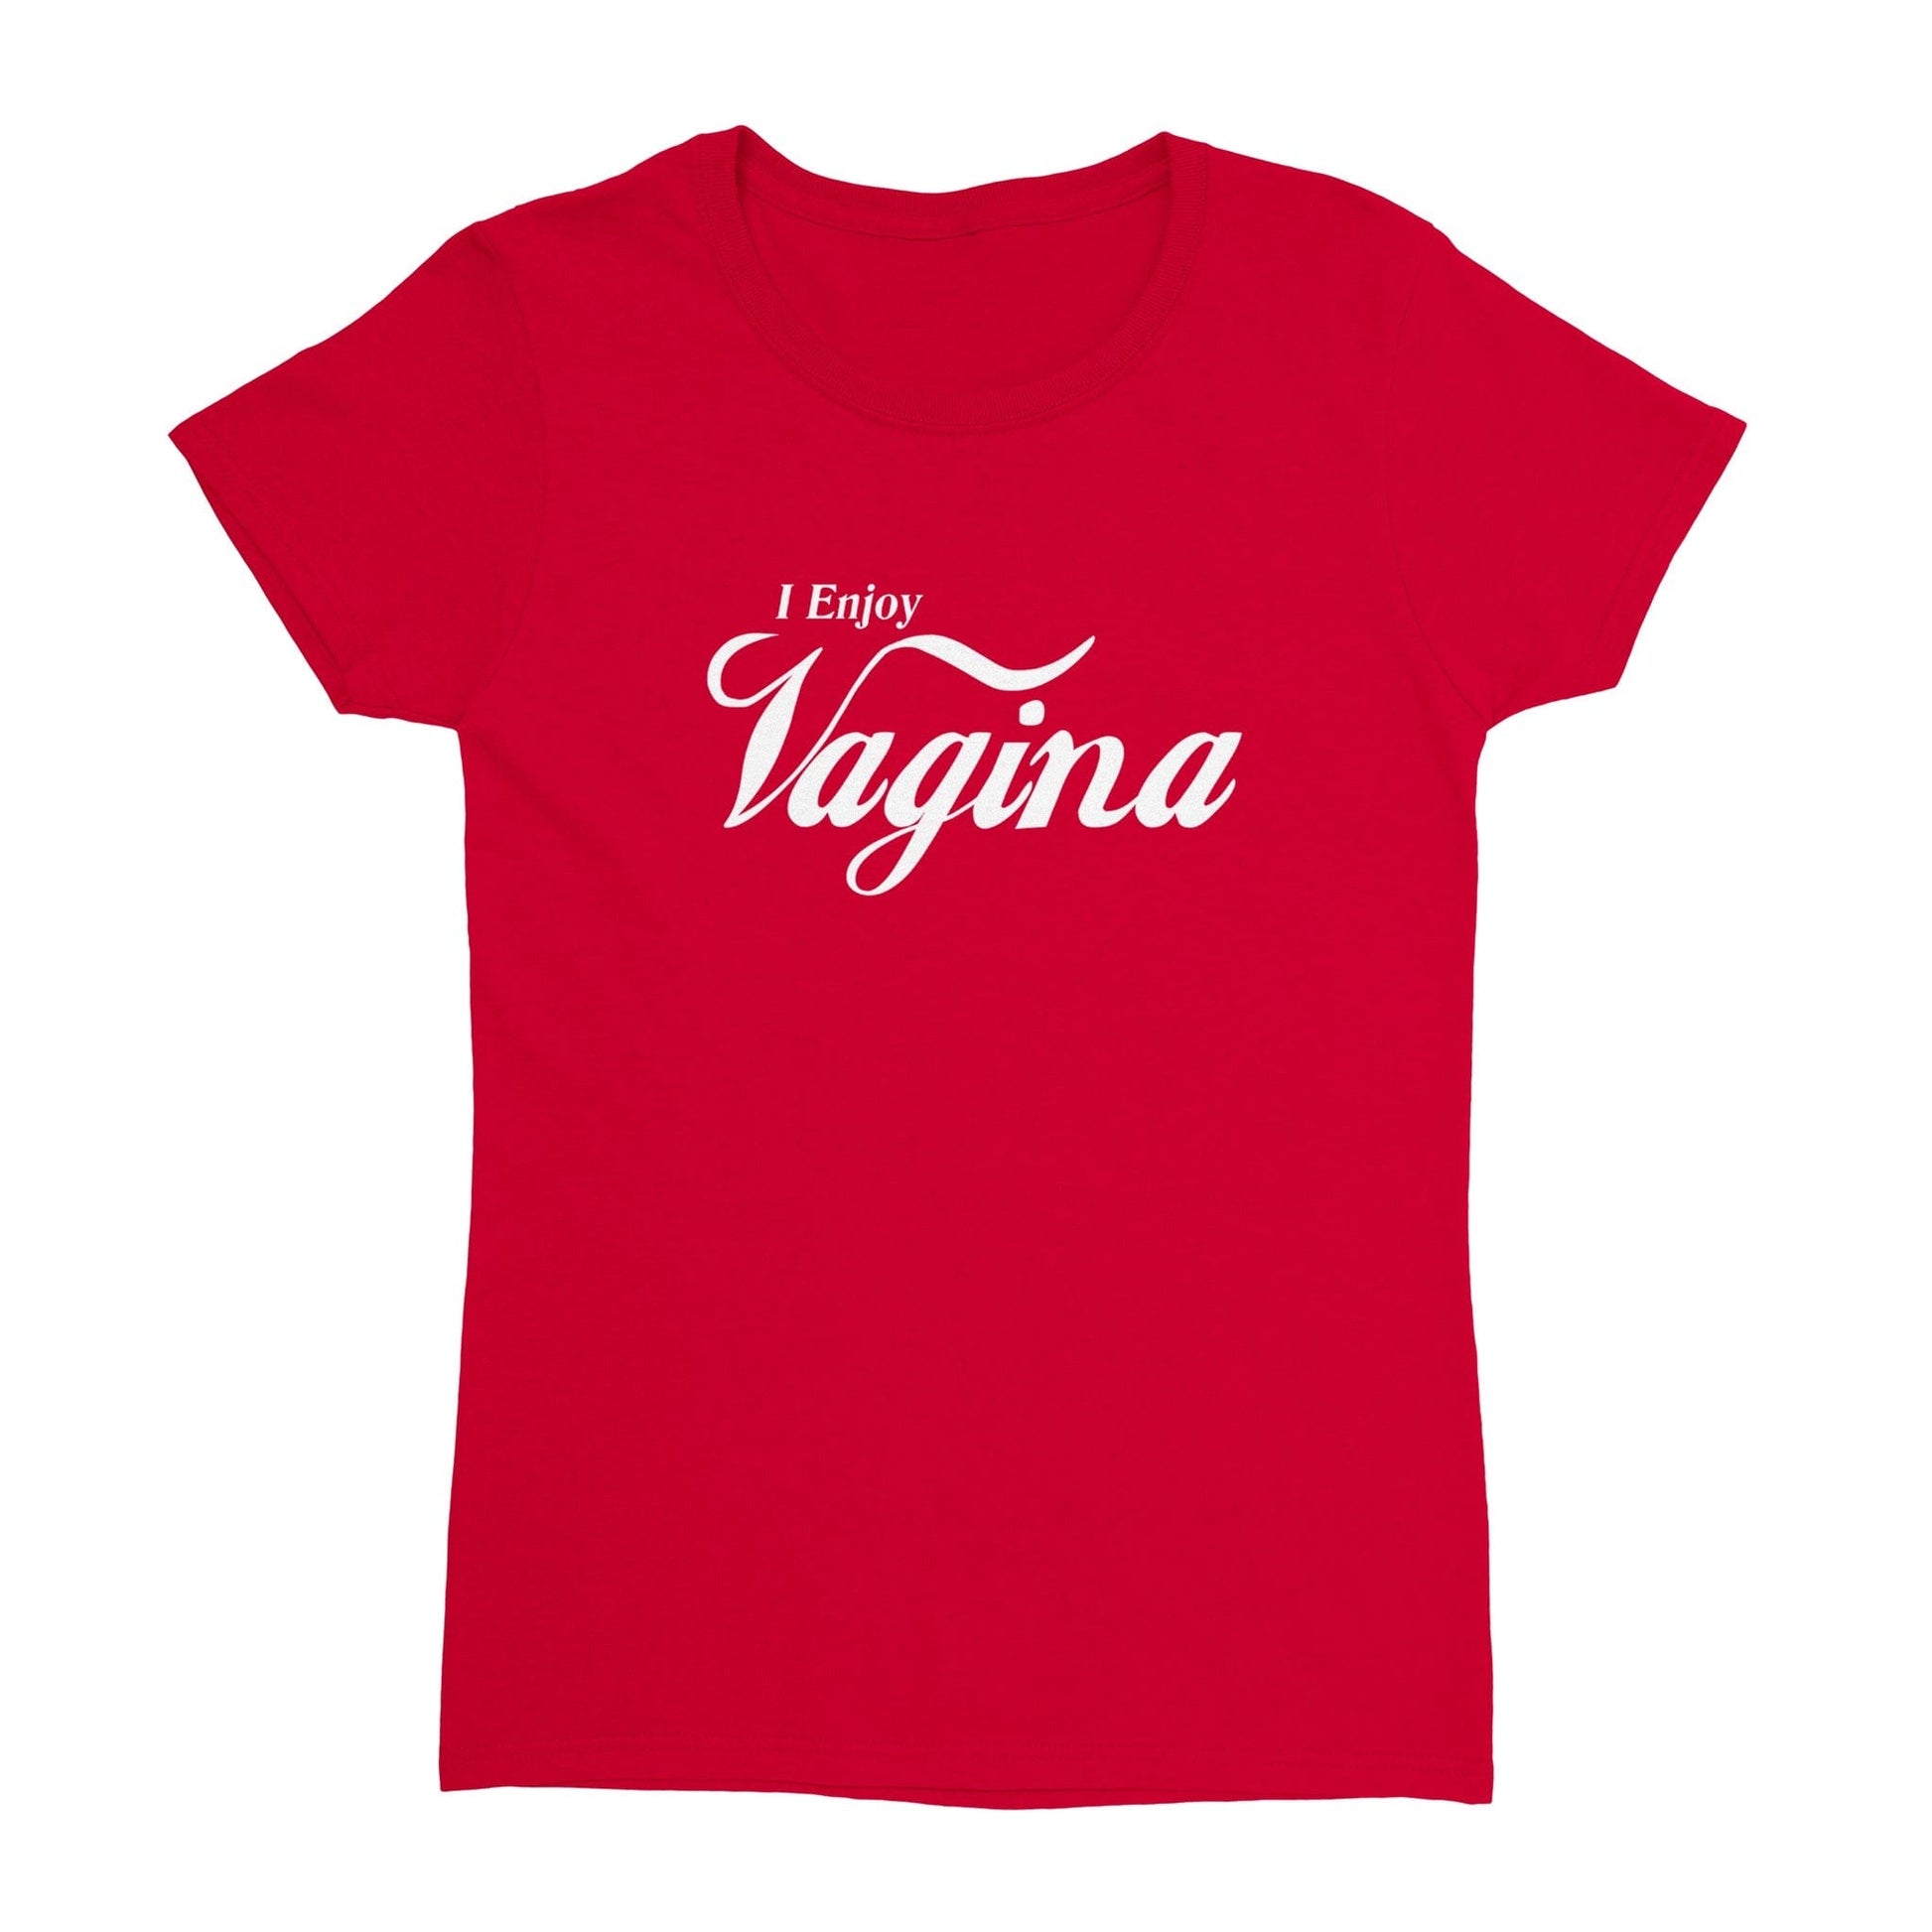 I Enjoy Vagina Coke T-Shirt Australia Online Color Red / Womens / S